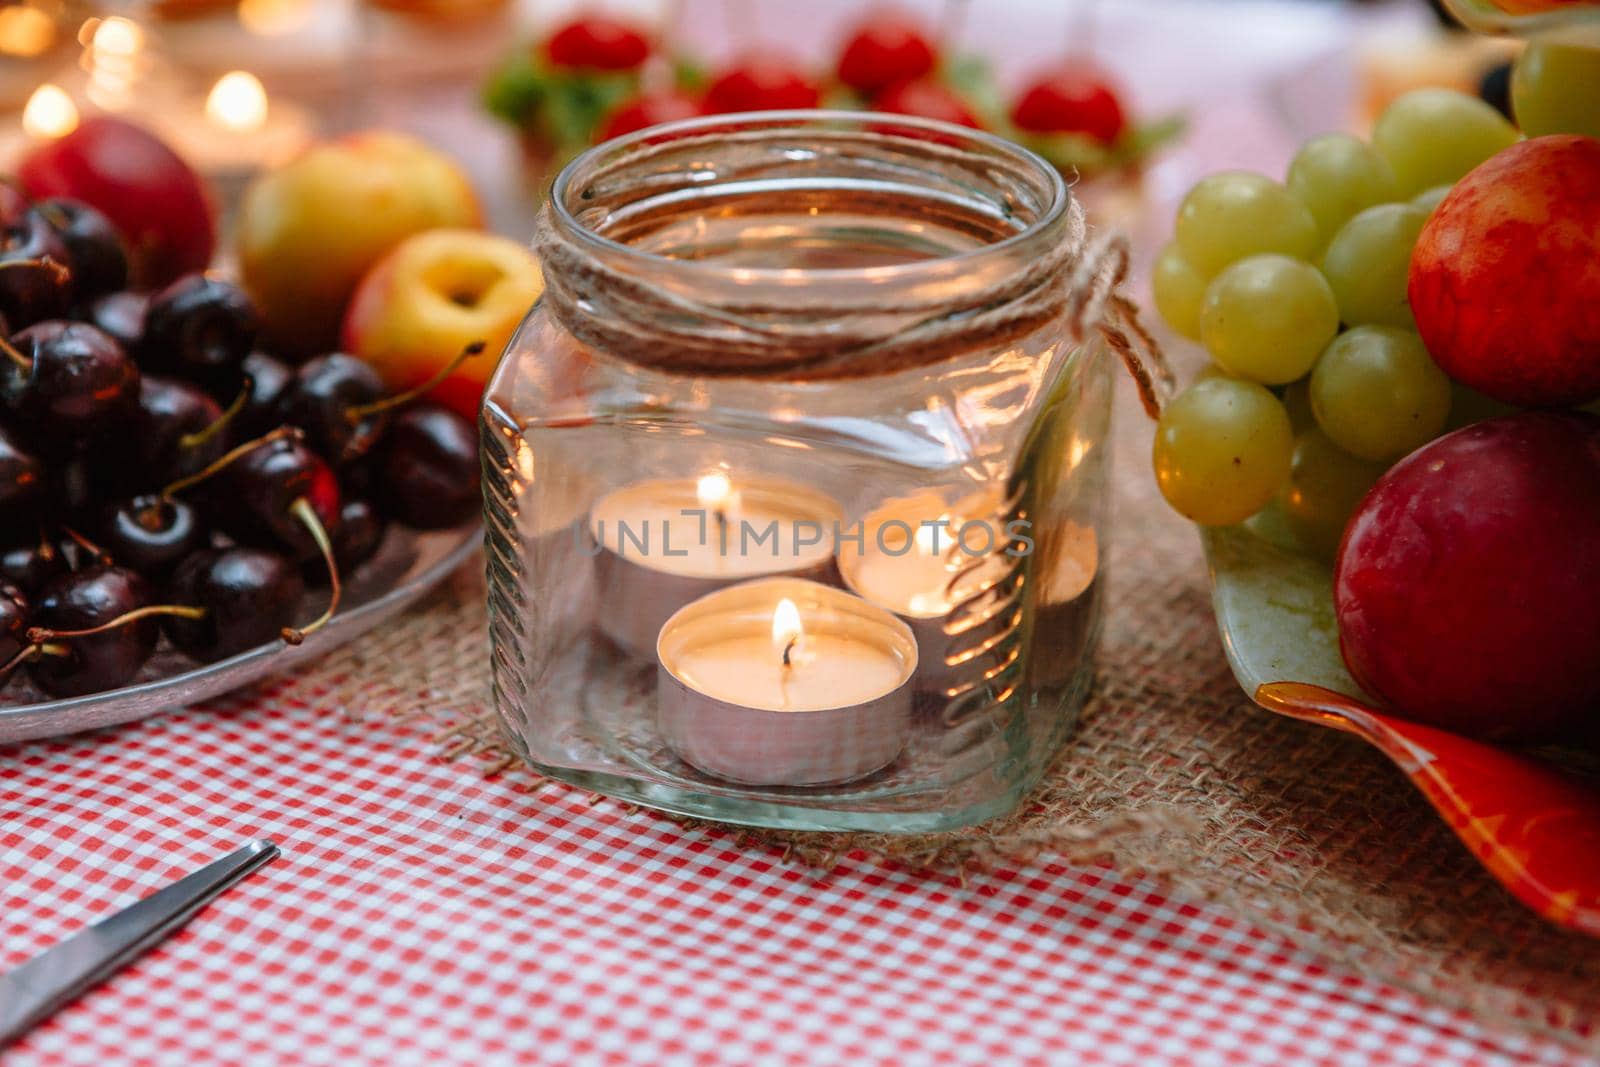 A transparent jar containing small burning candles